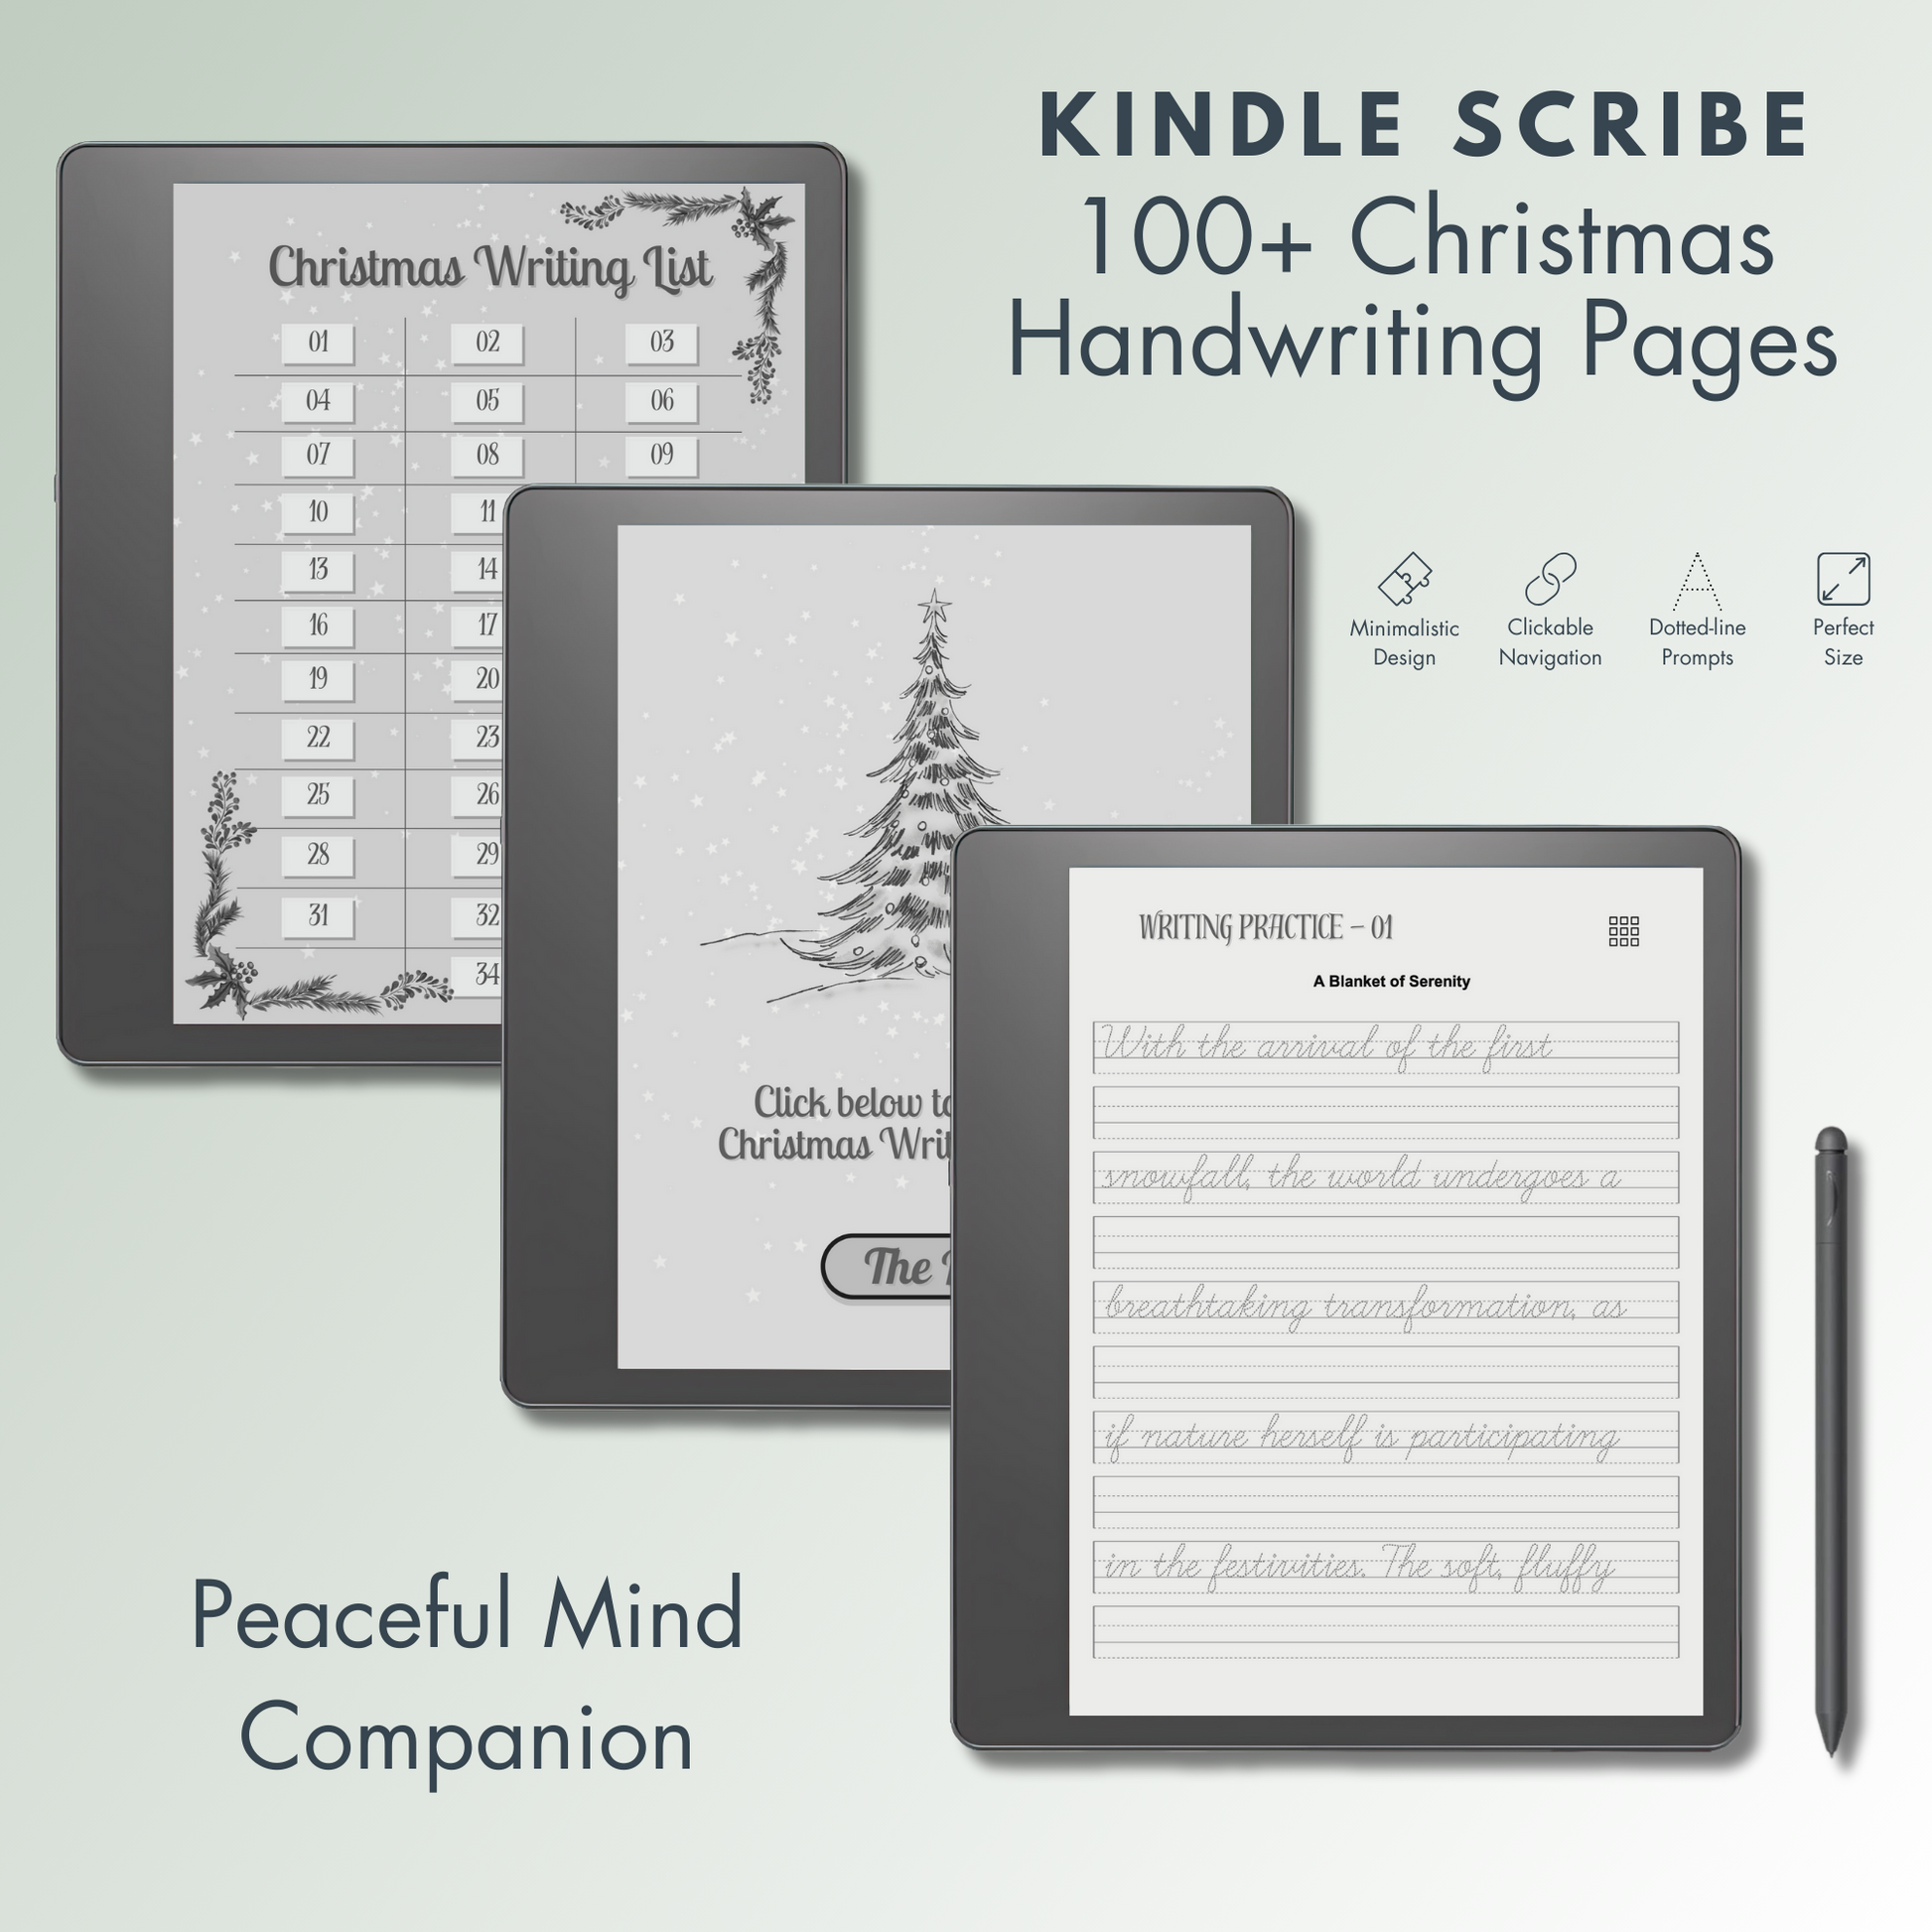 Kindle Scribe Christmas Writing Pages.